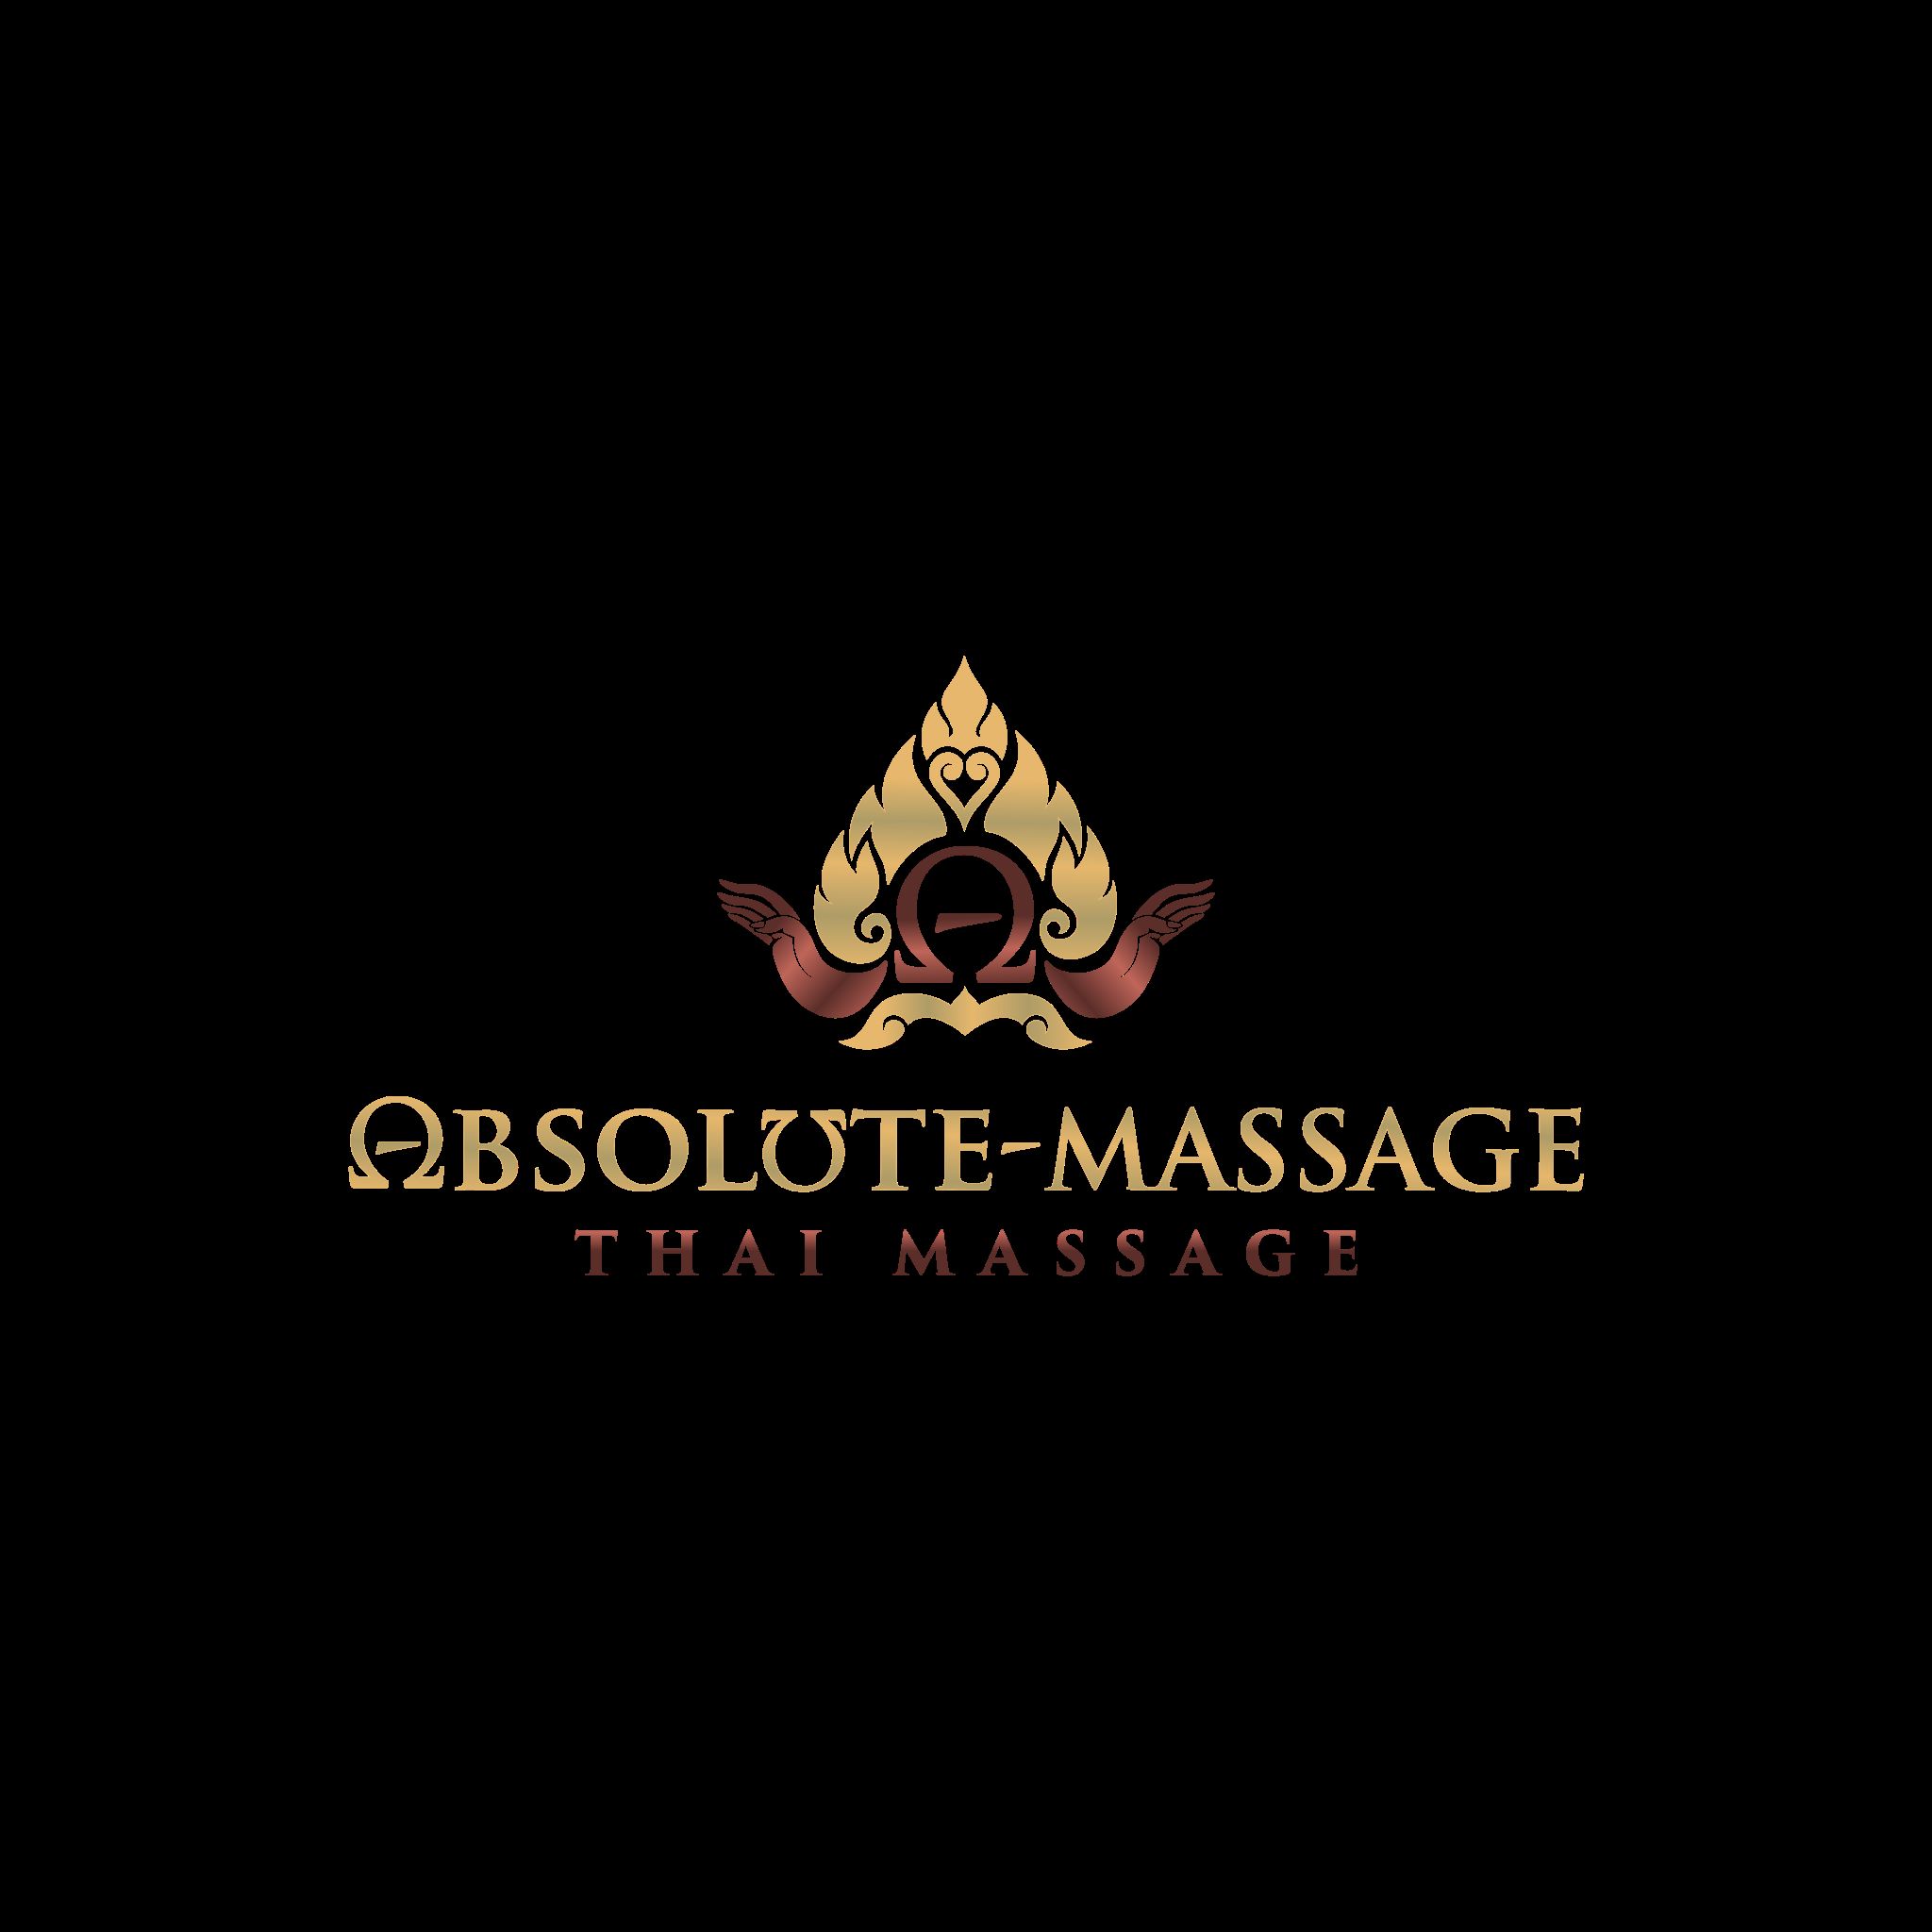 (c) Absolute-massage.com